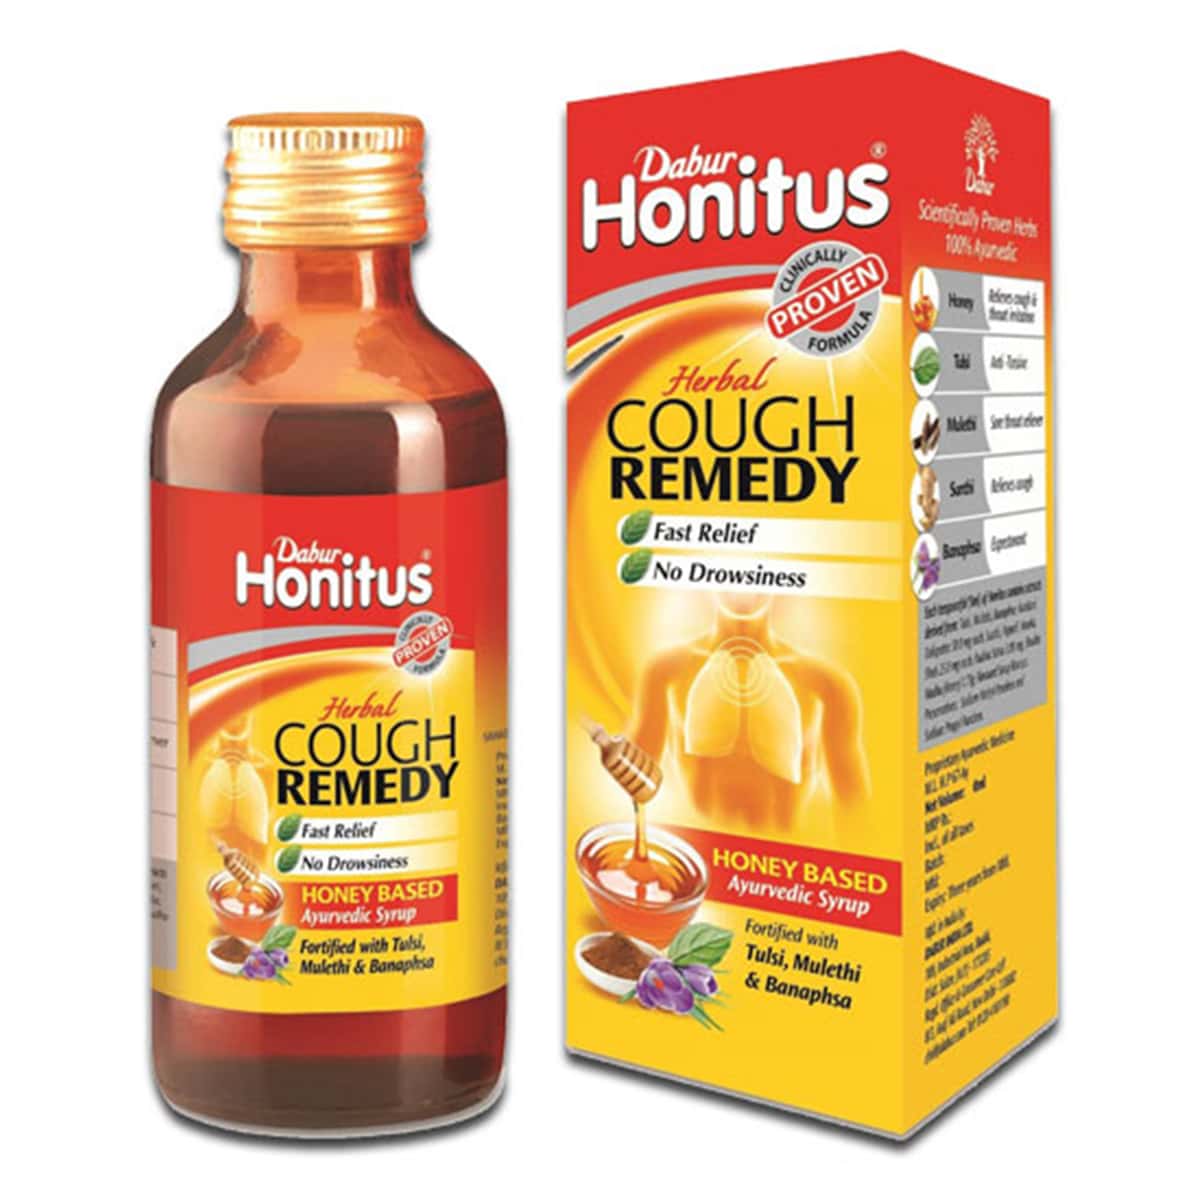 Buy Dabur Honitus Herbal Cough Remedy Honey Based Ayurvedic Syrup - 100 ml